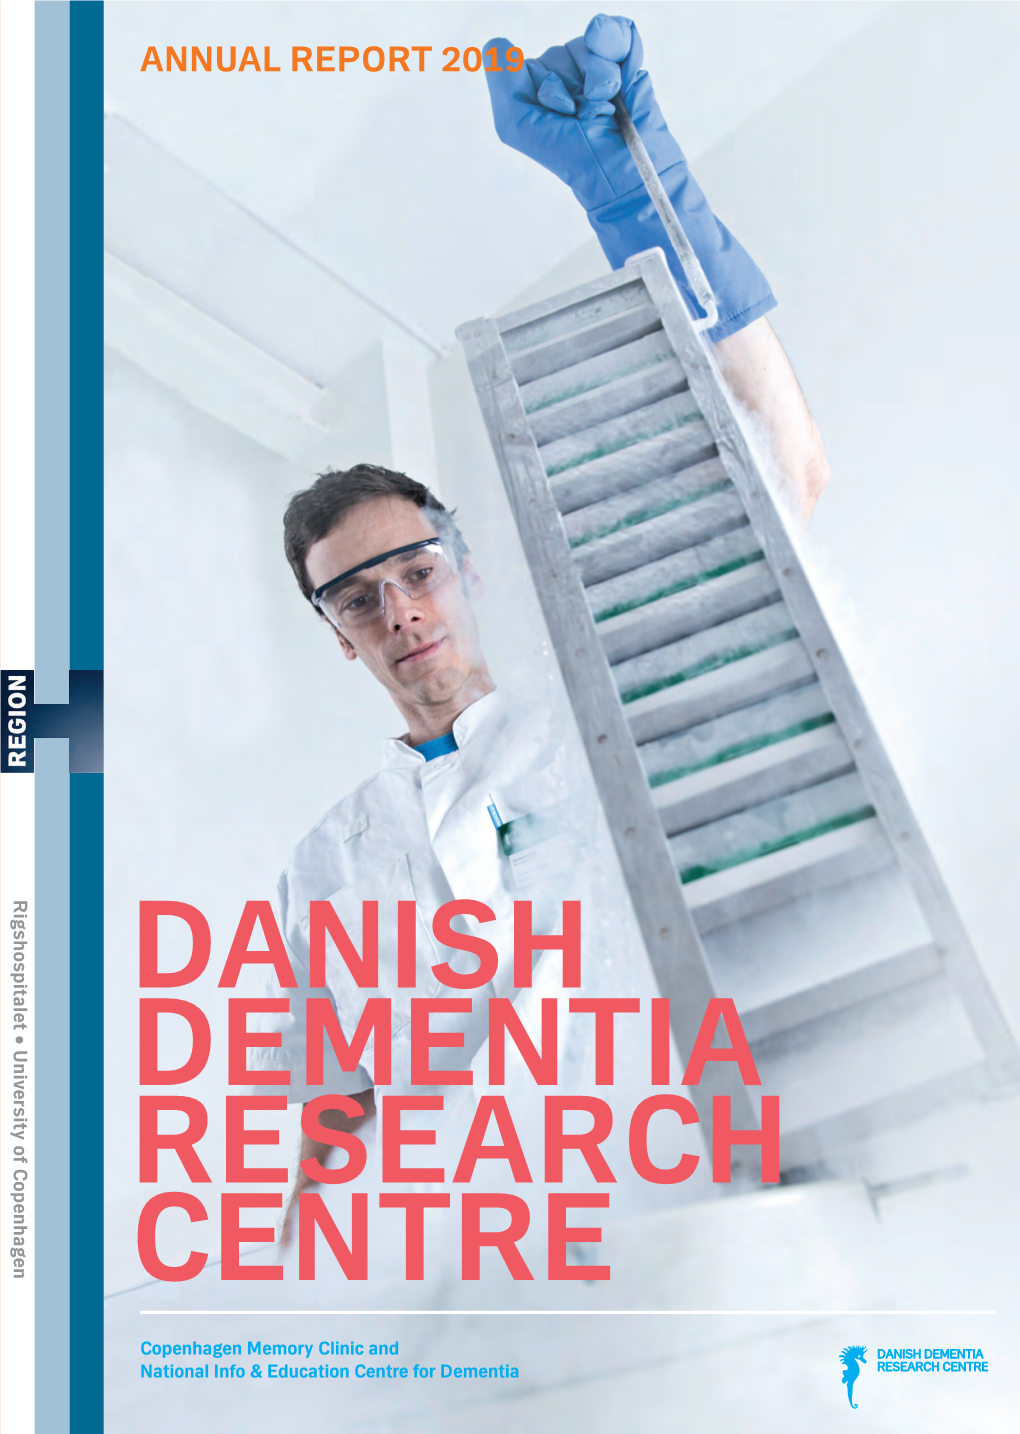 Annual Report 2019 Report Annual Danish Dementia Research Centre